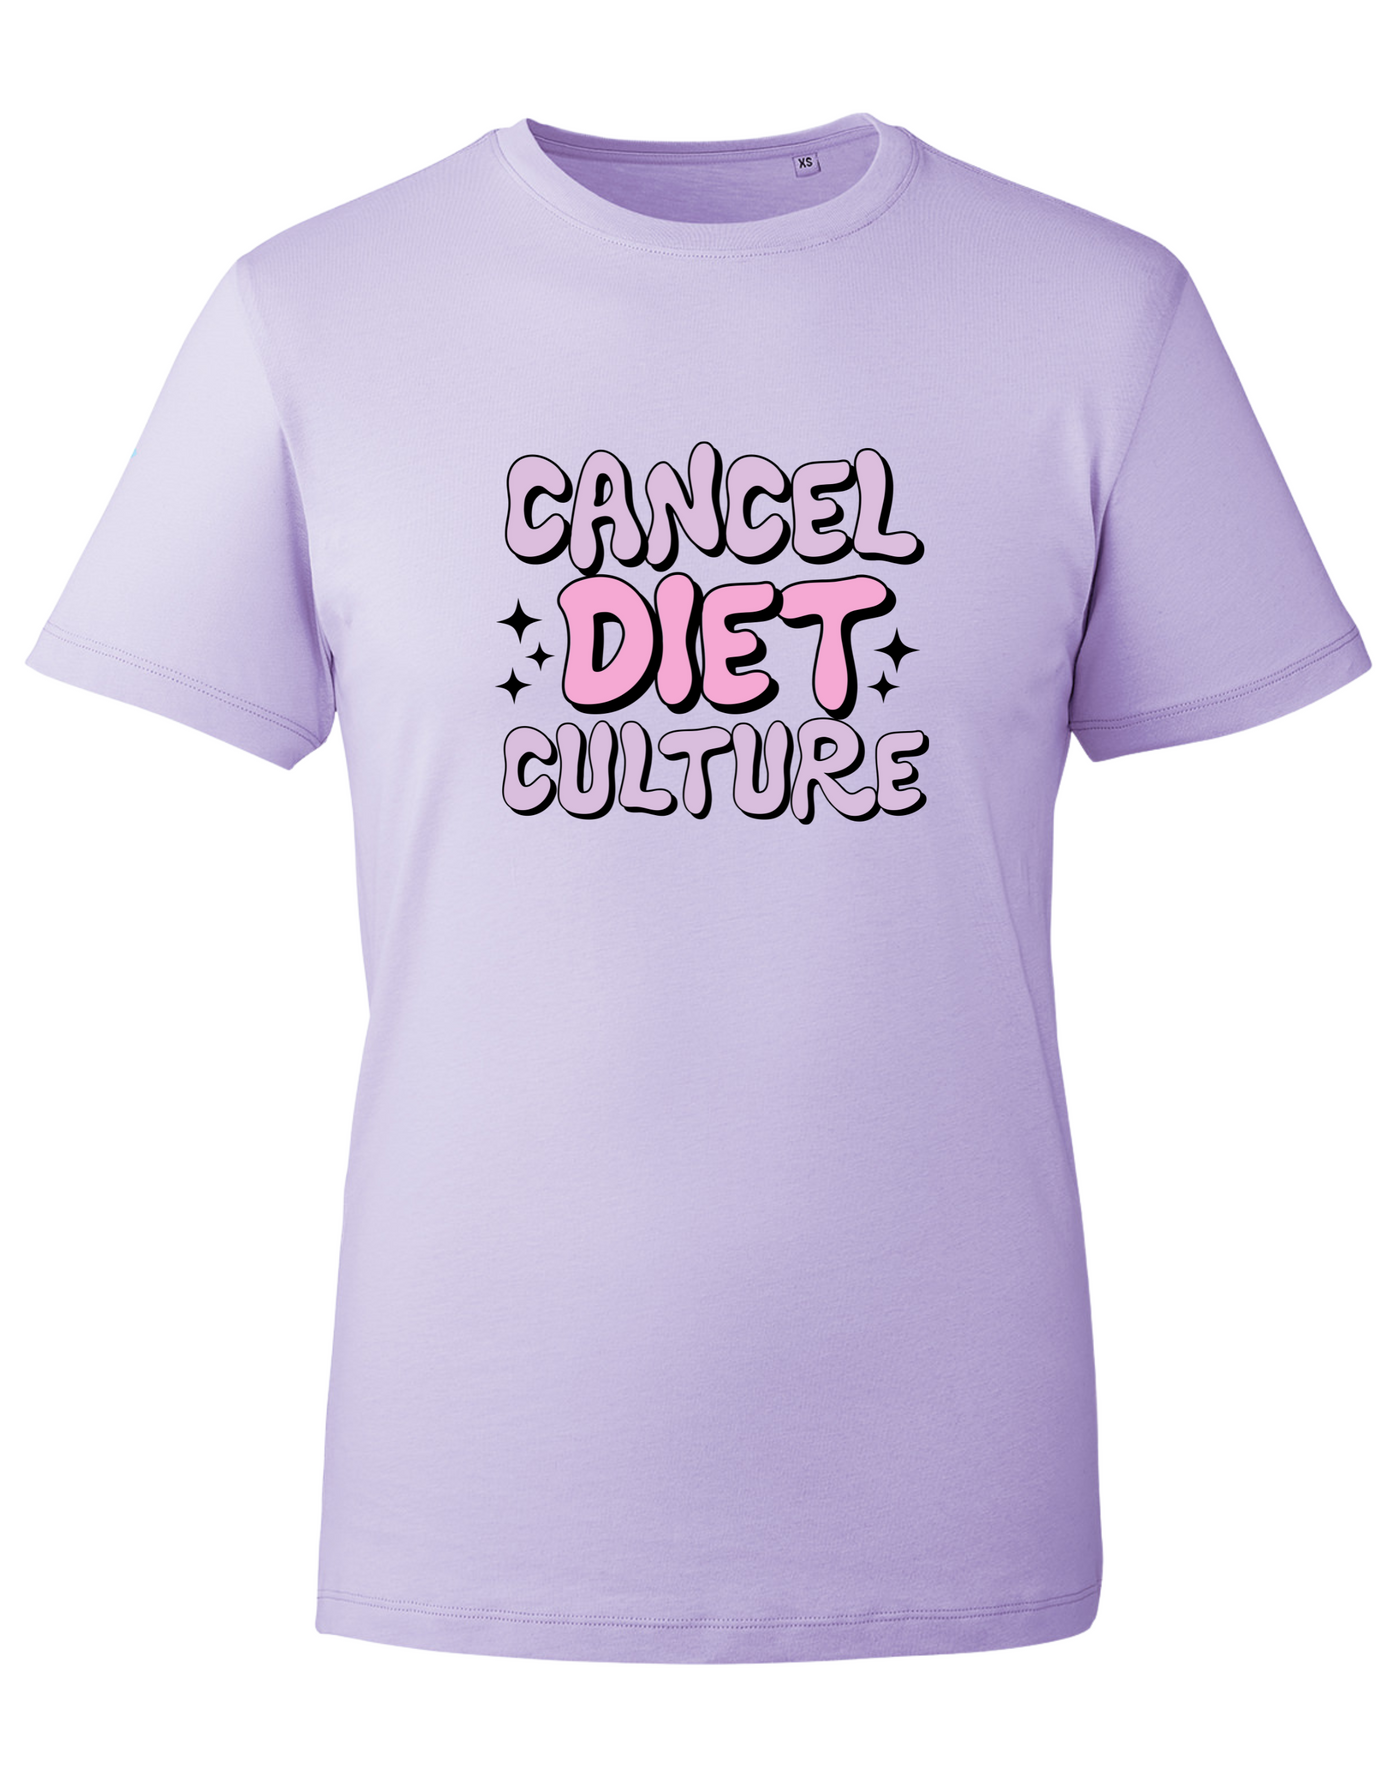 "Cancel Diet Culture" Unisex Organic T-Shirt